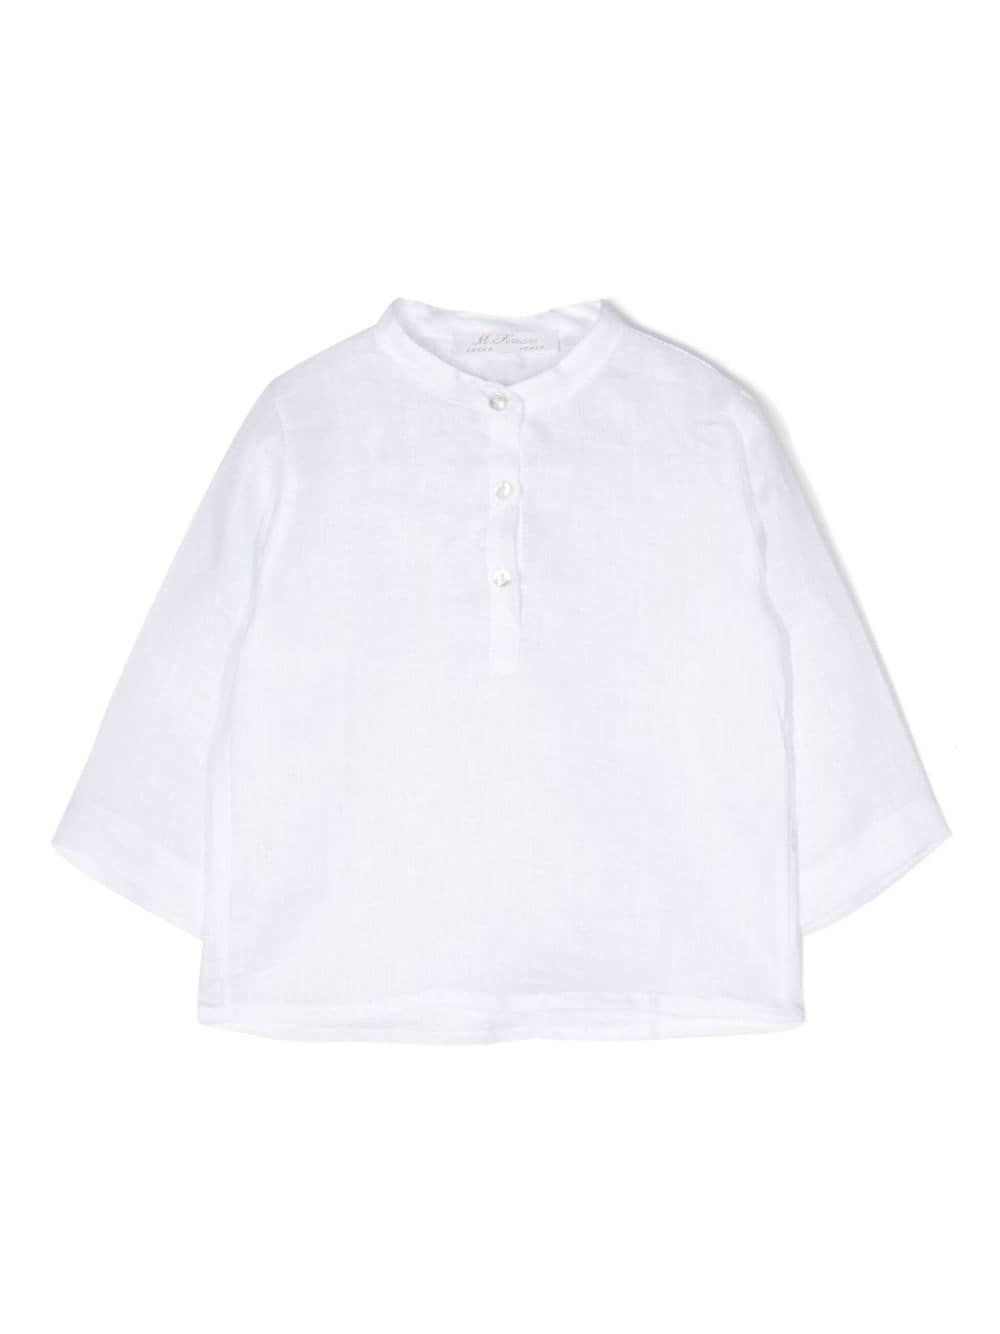 Mariella Ferrari linen polo shirt - White von Mariella Ferrari